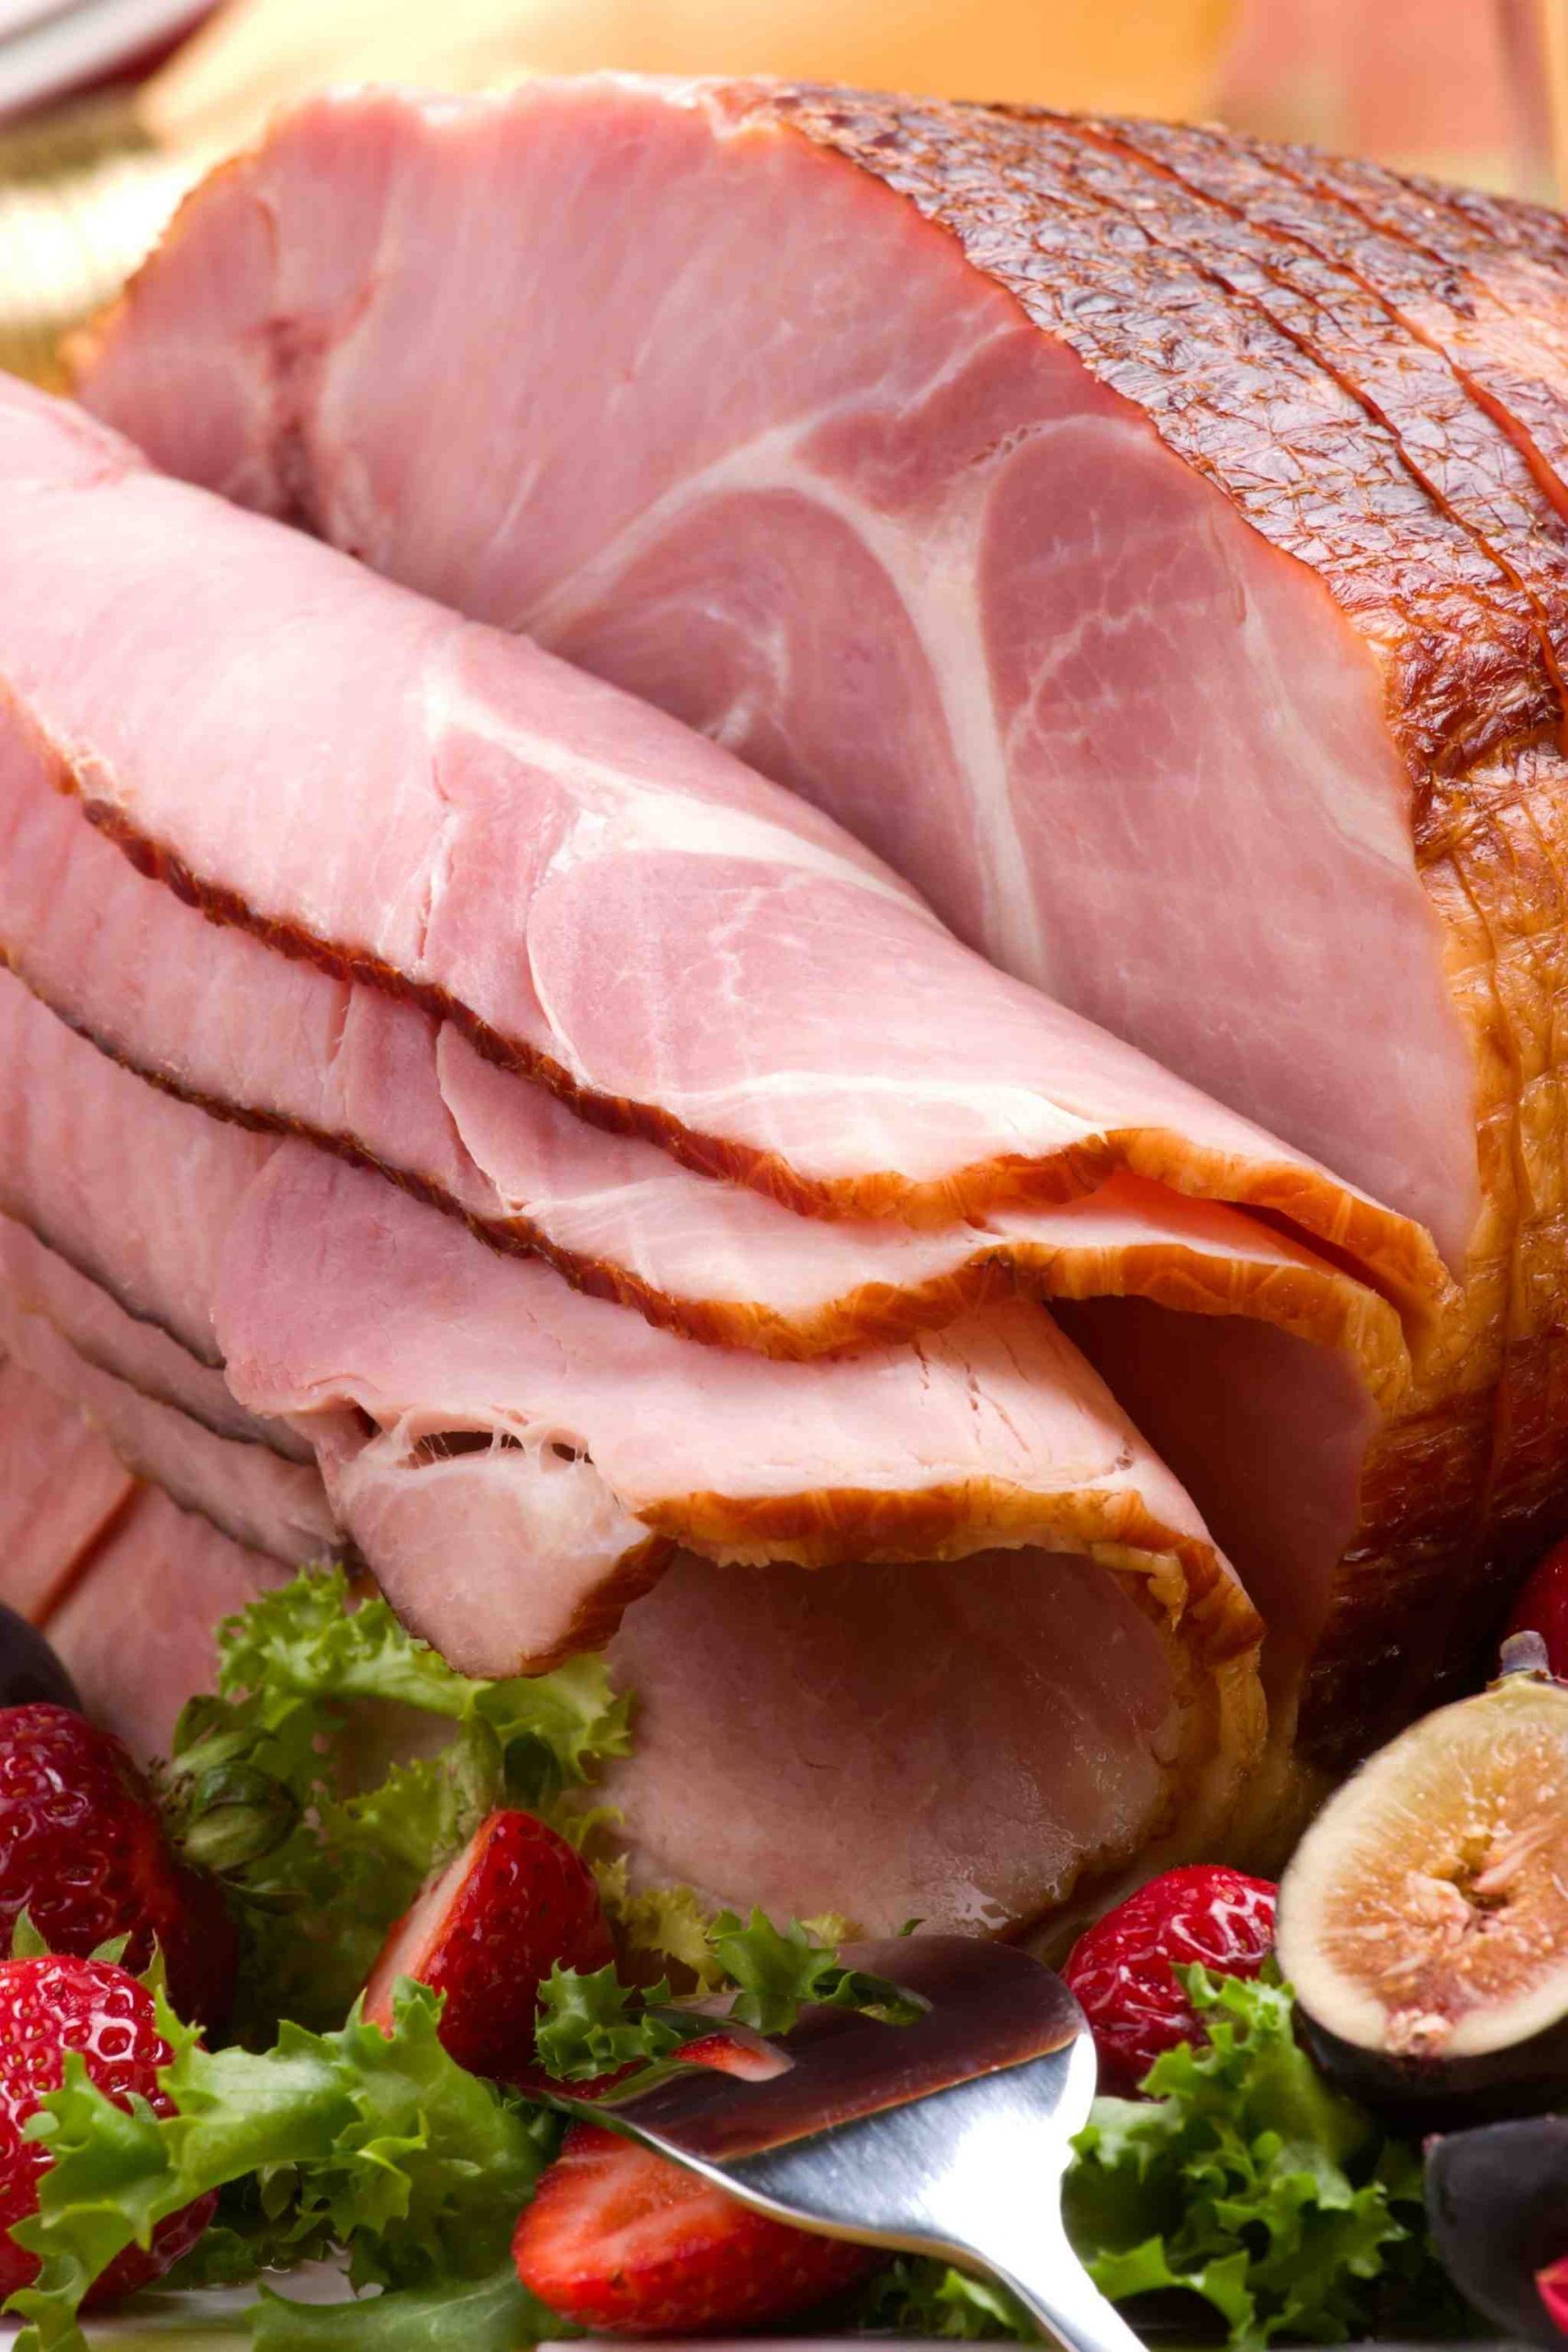 What makes a ham a country ham?